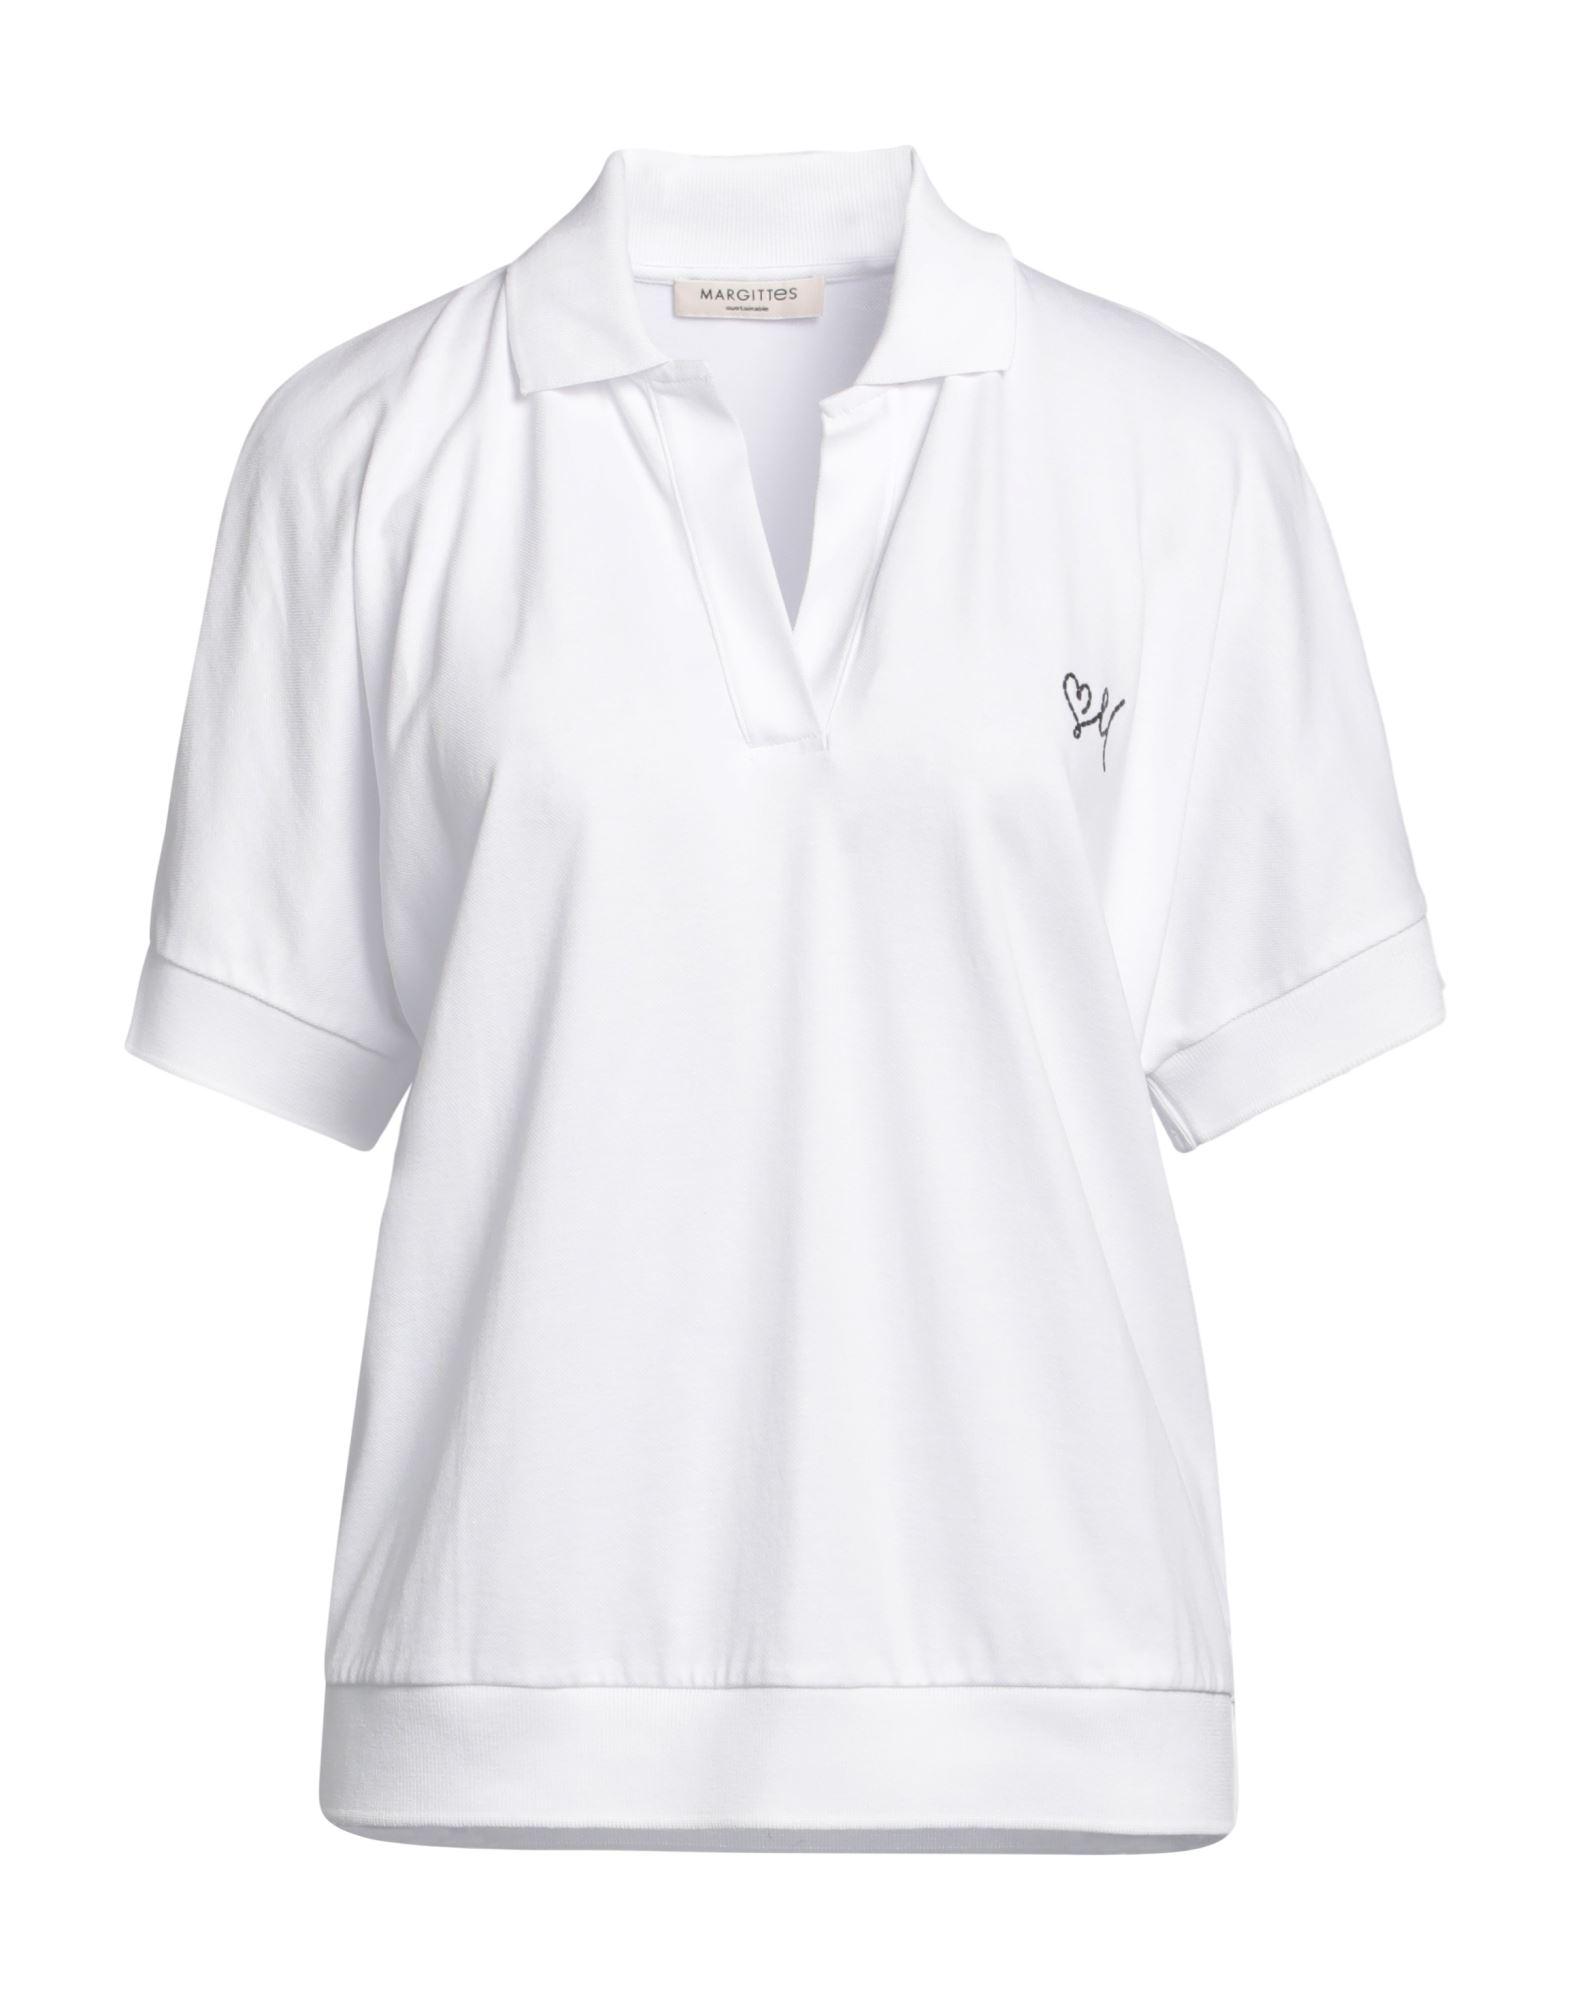 Margittes Polo Shirt in White | Lyst